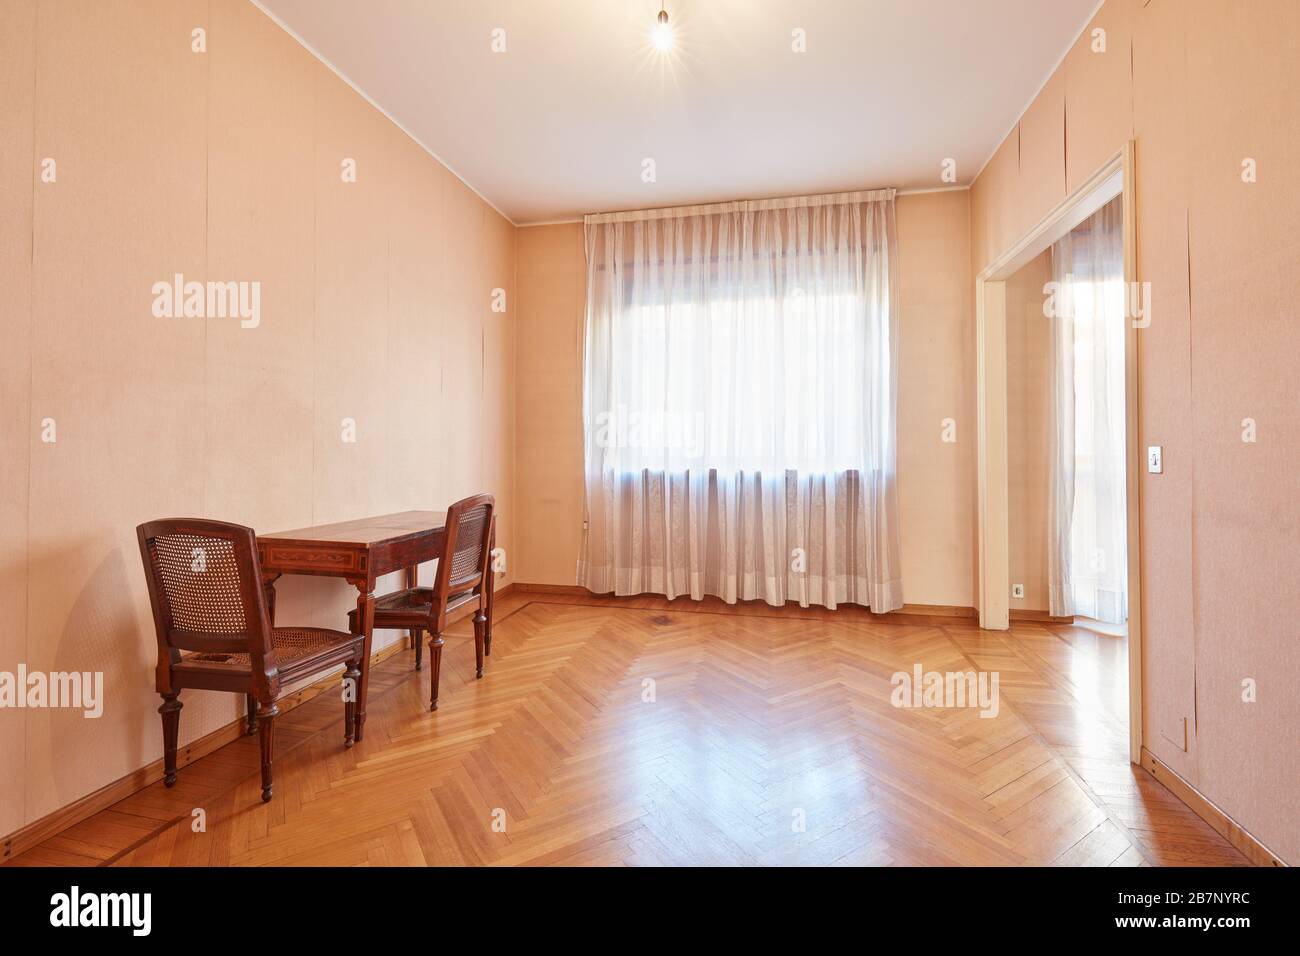 Room with parquet floor in apartment interior Stock Photo